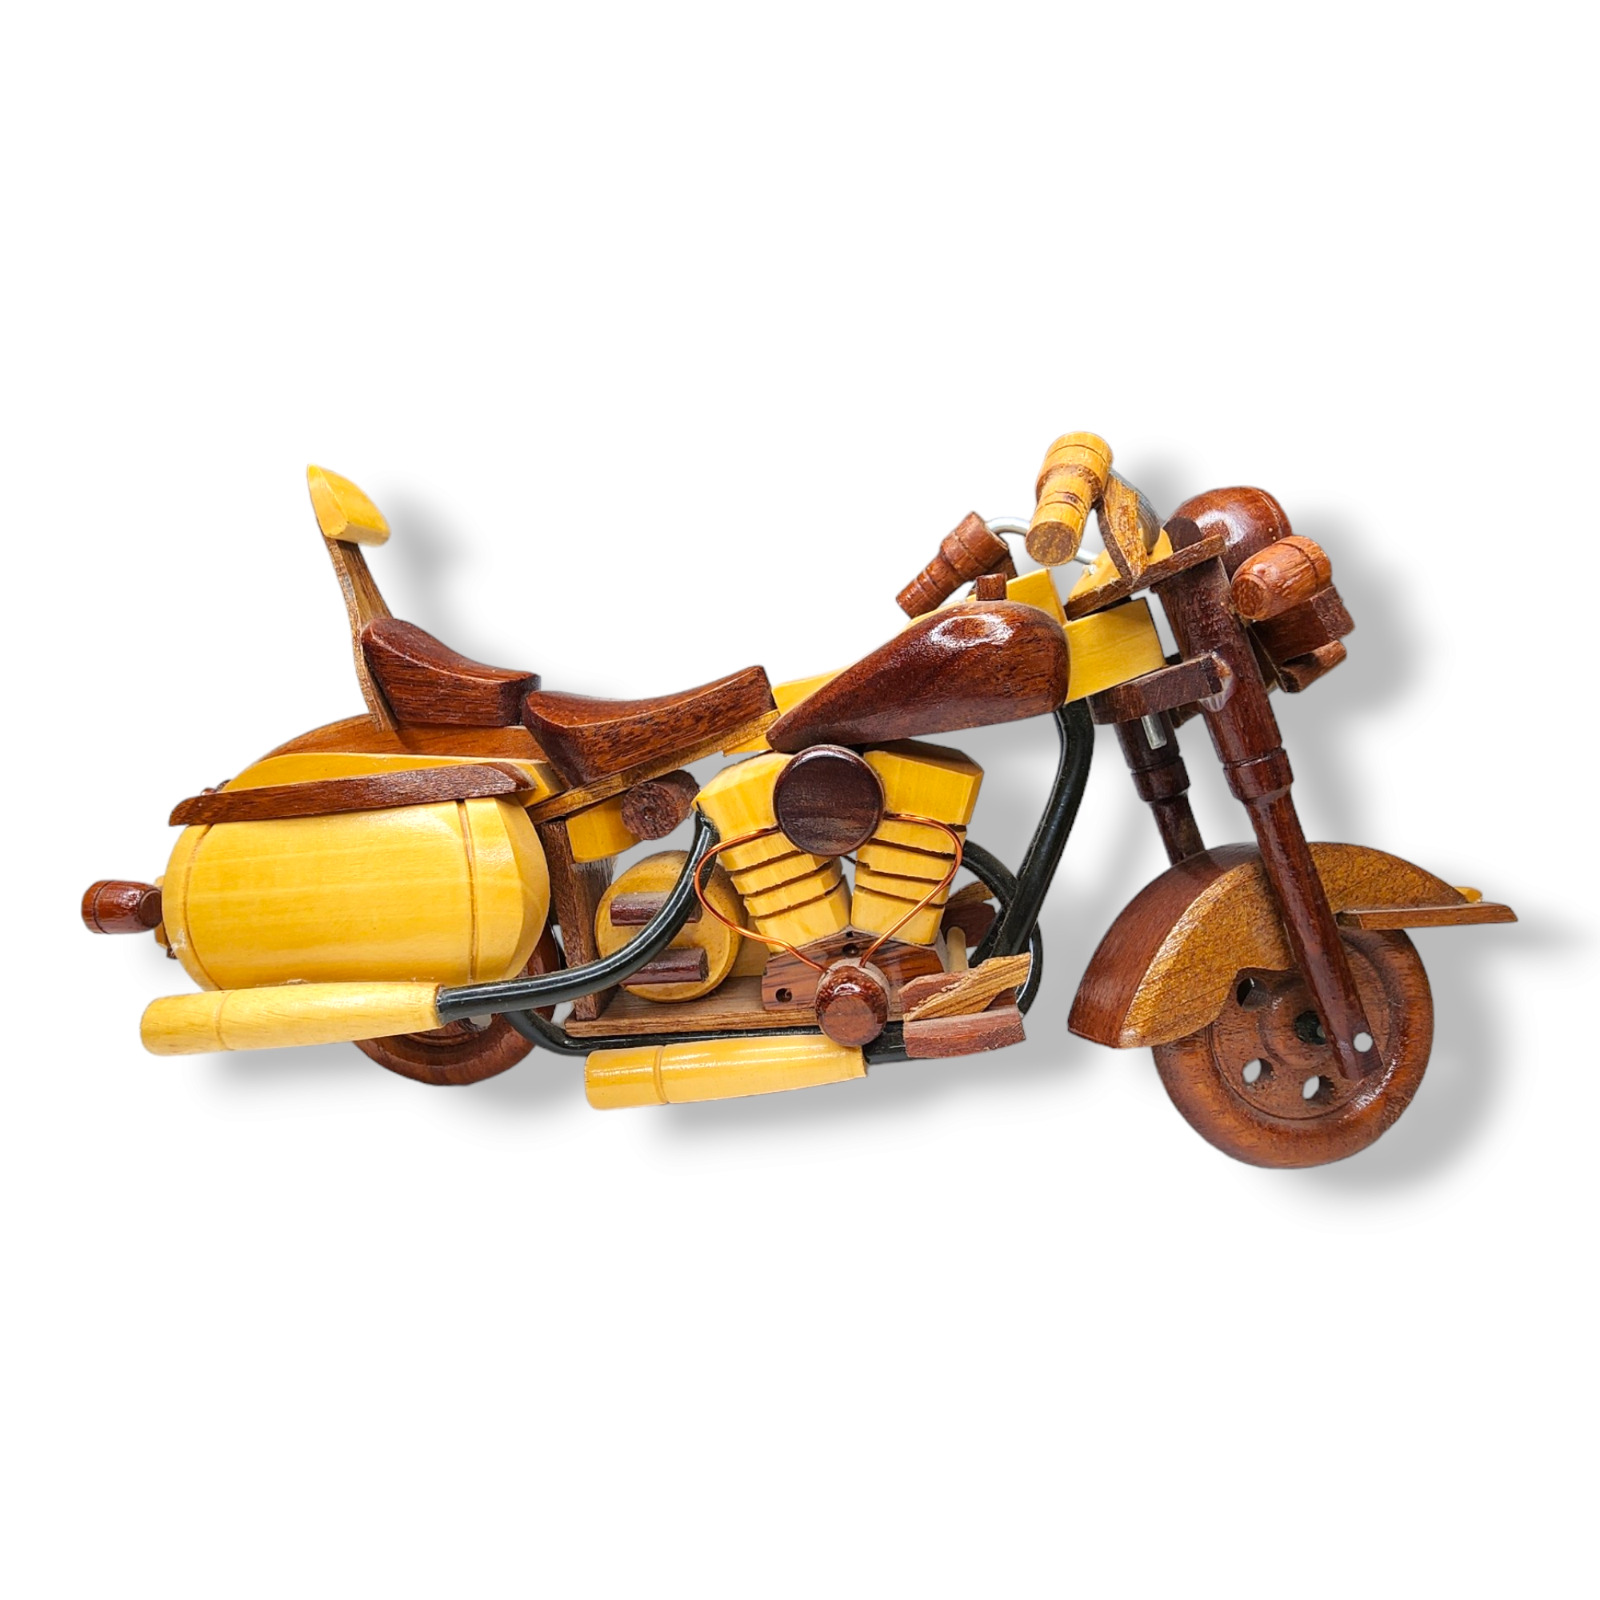 Artisan Handmade Wooden Motorcycle Replica